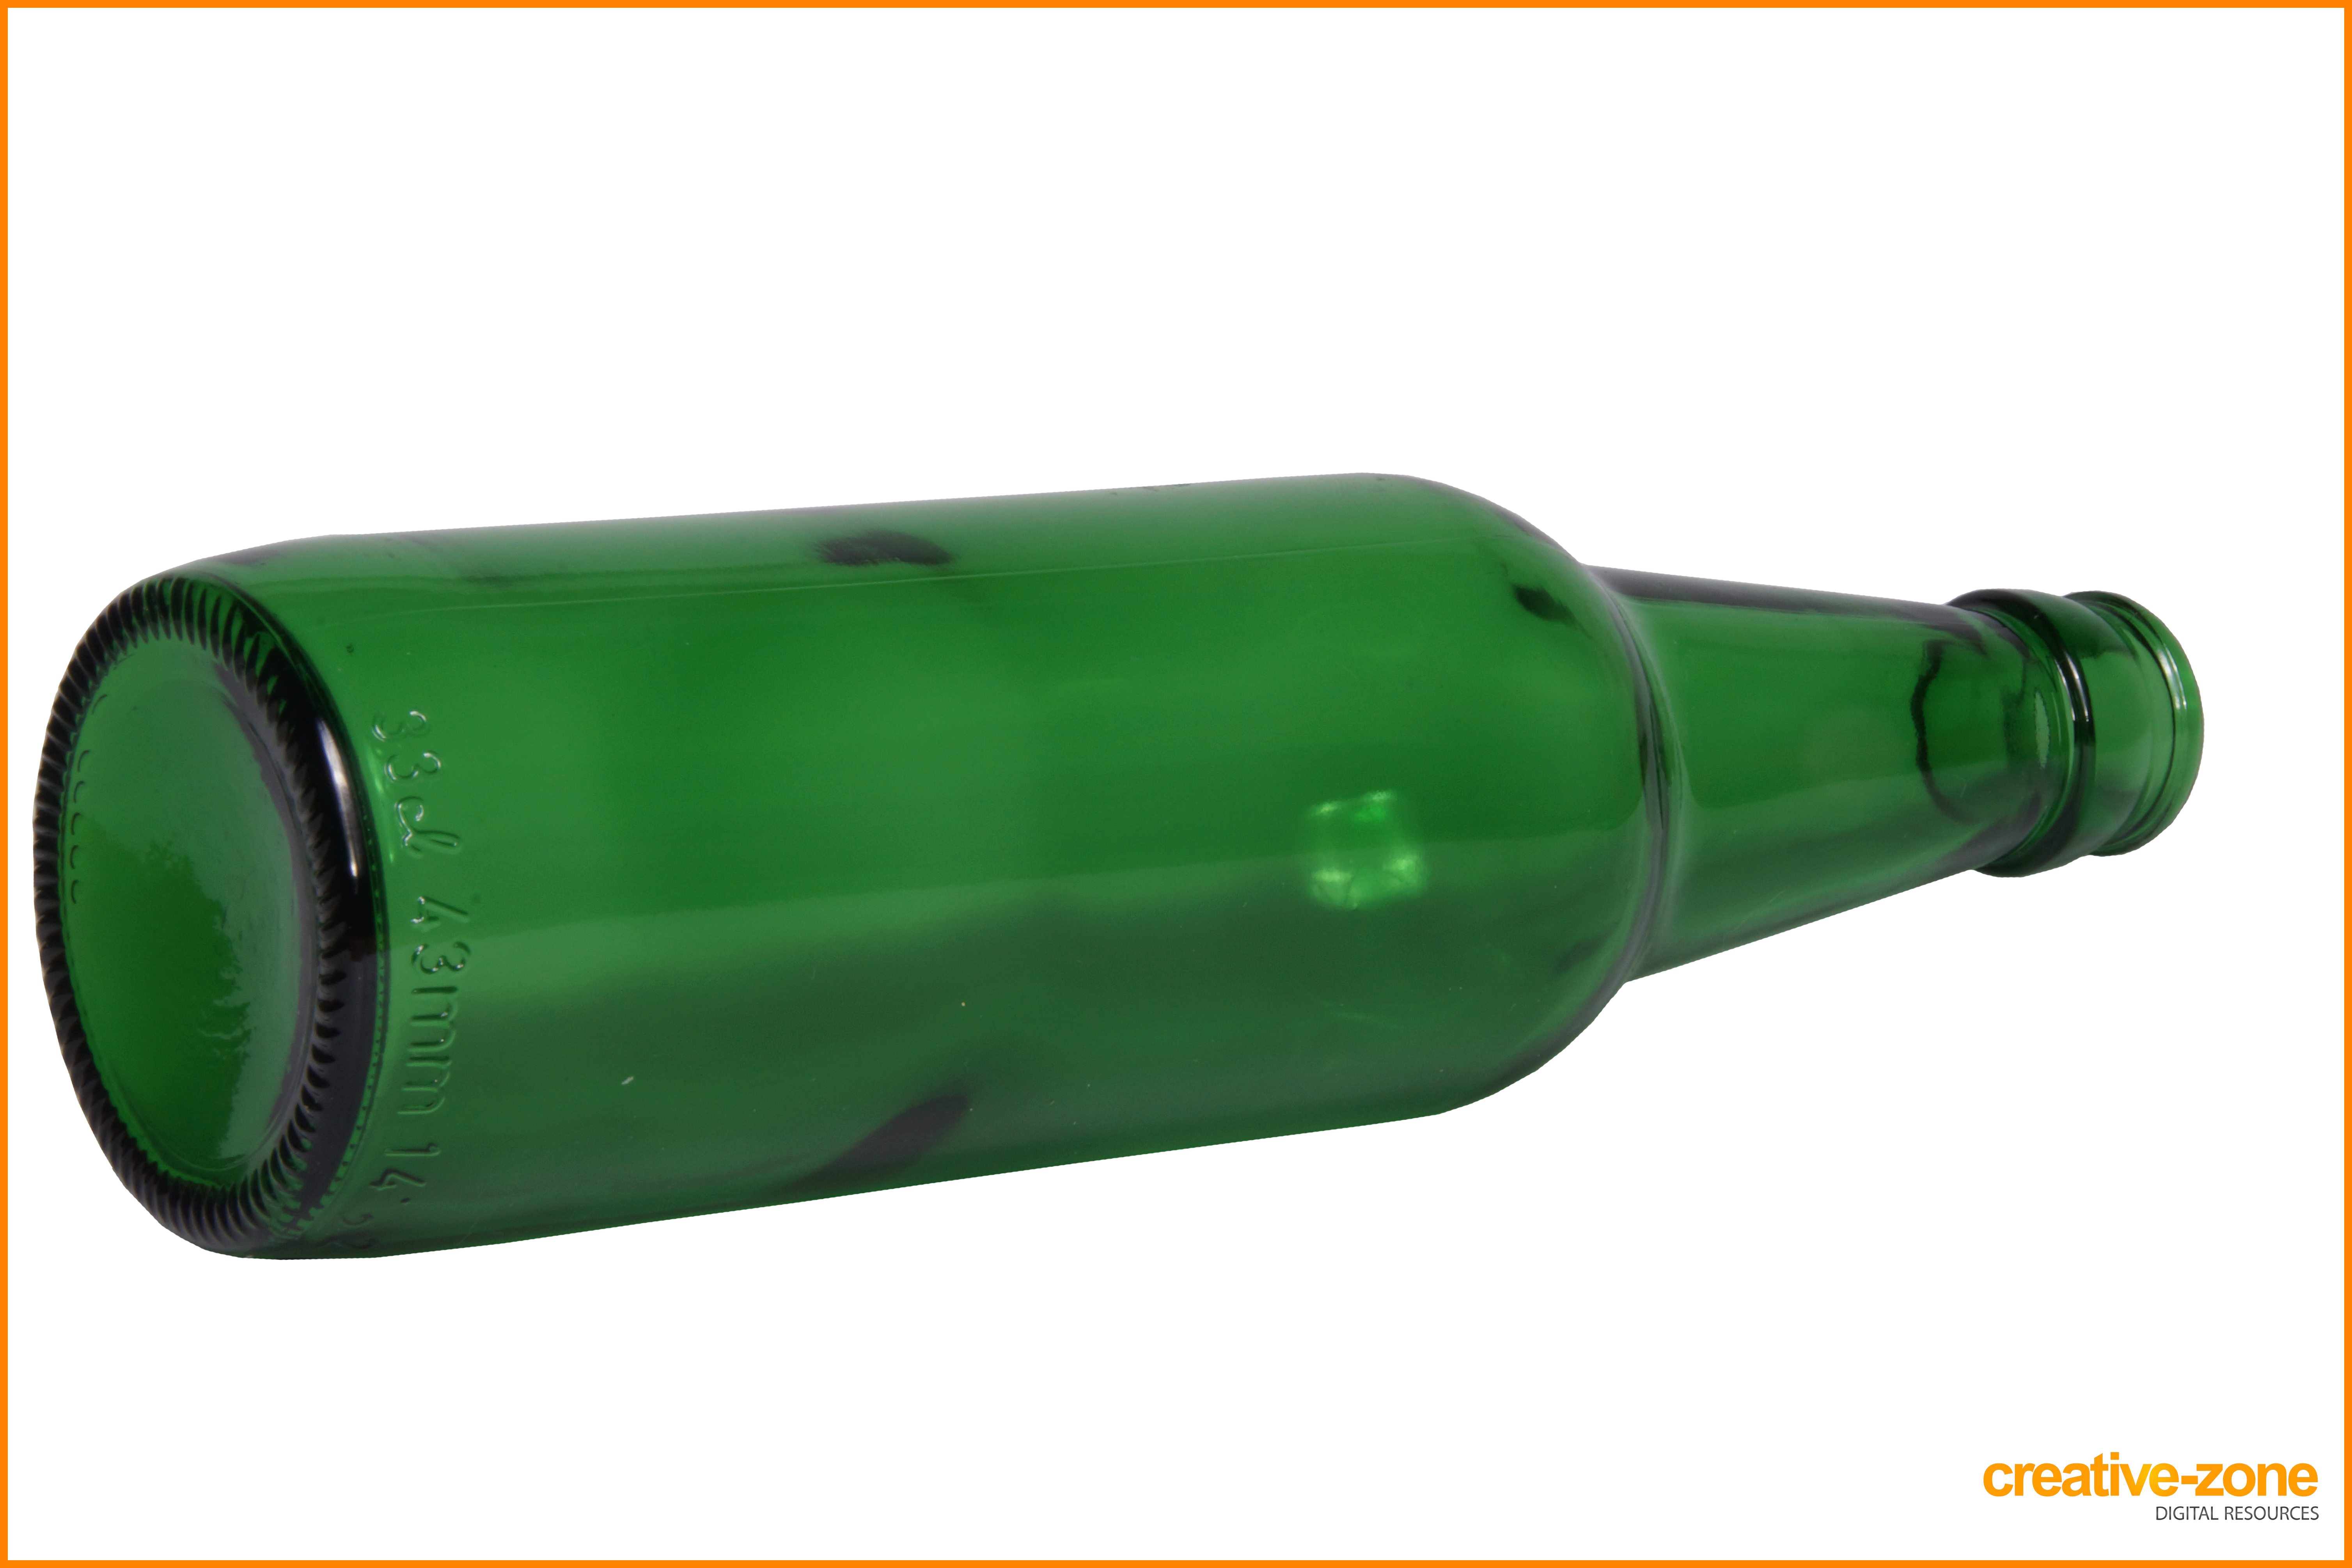 Buy Glass Ideas Bottle - Green, For Milk/Water/Juice Online at